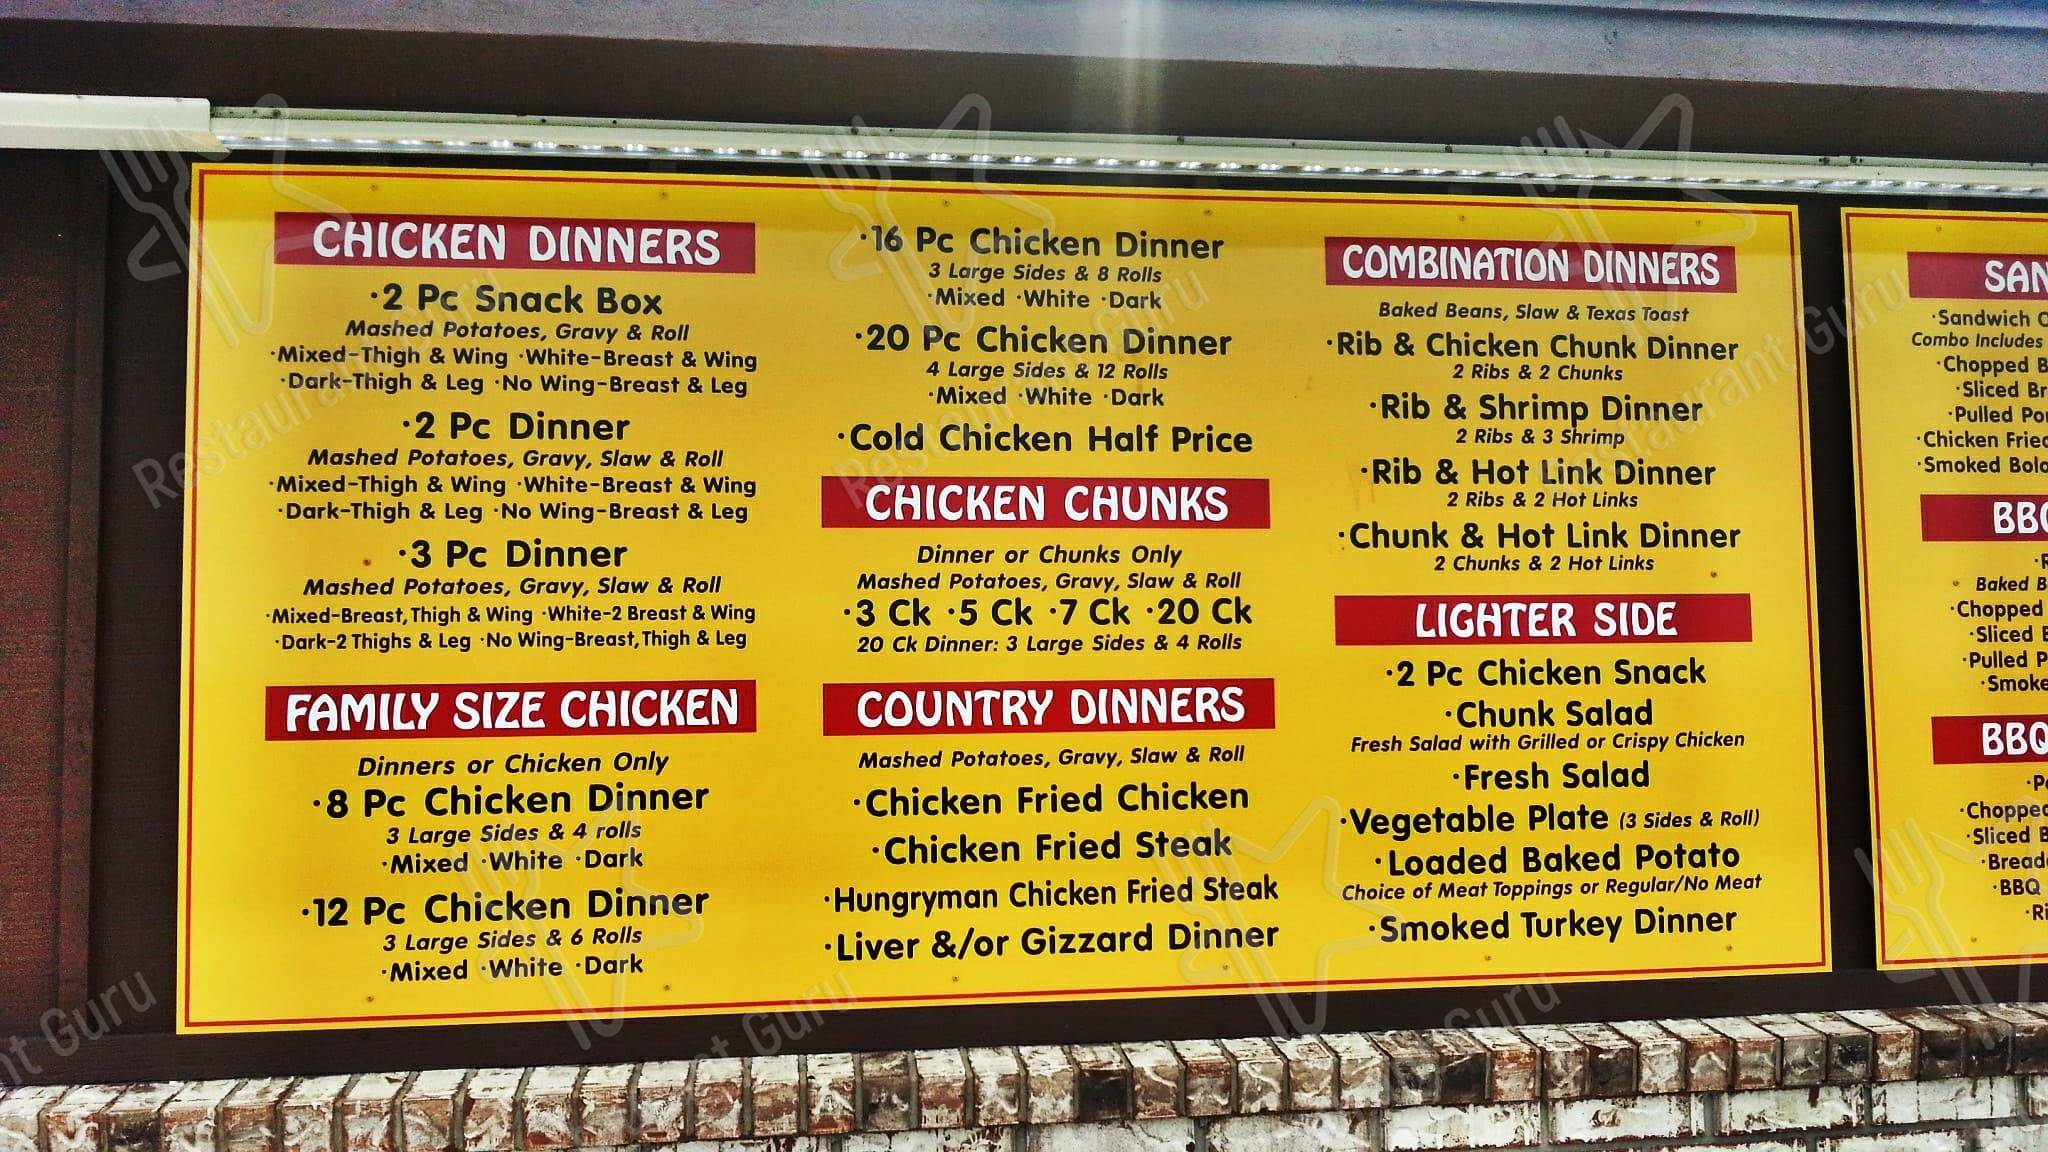 Charlie's Chicken & Barbecue menu